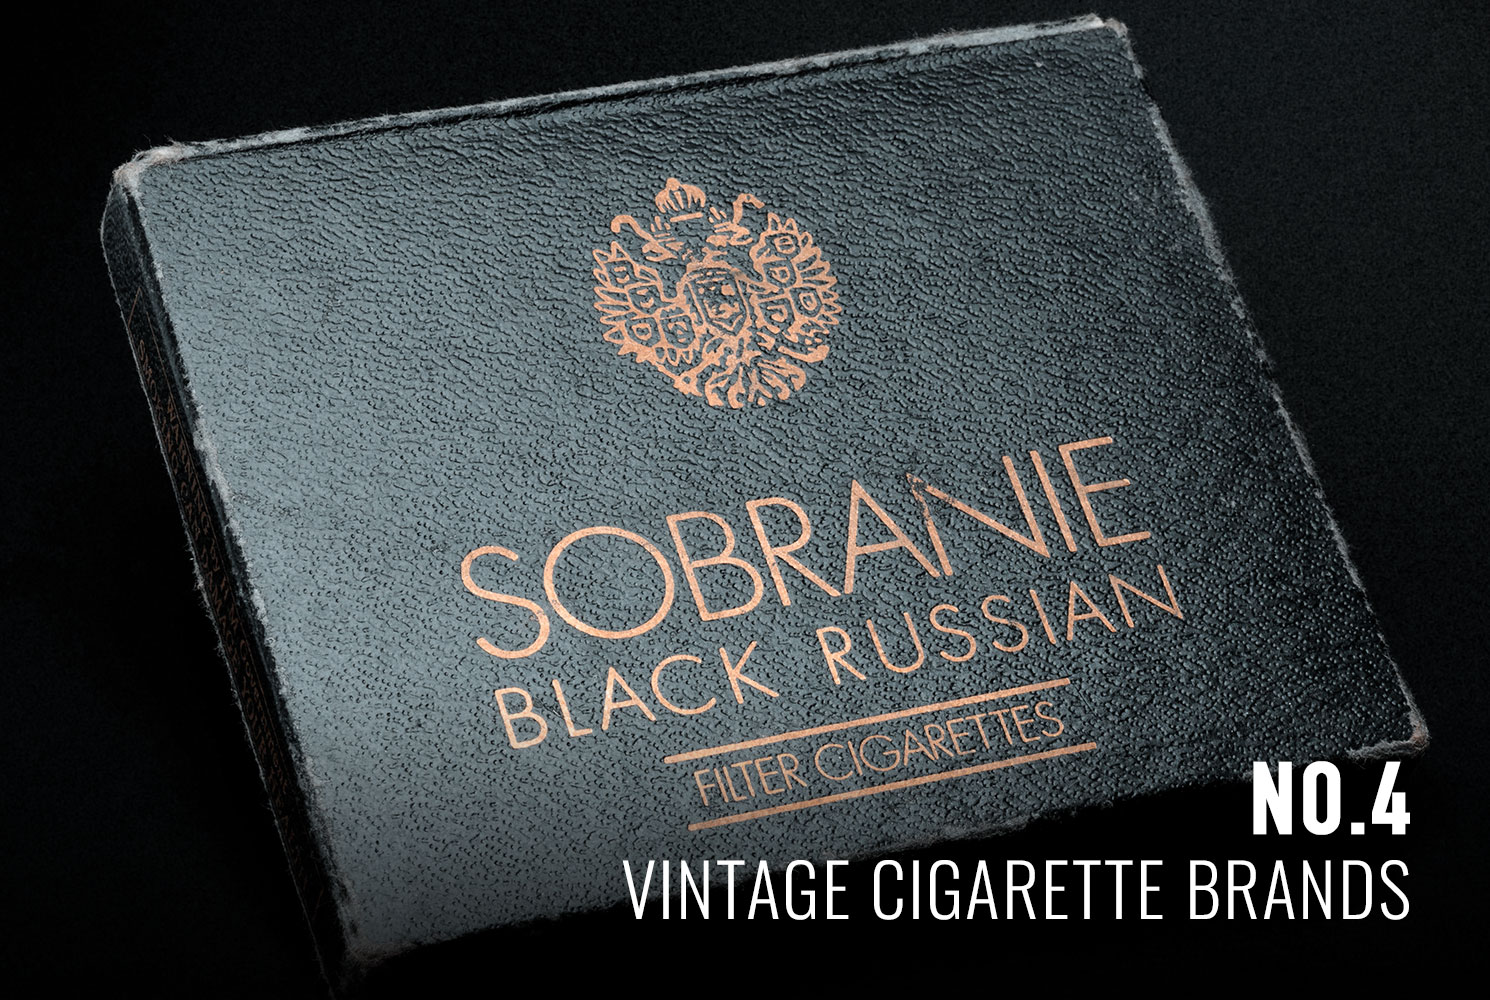 Sobranie Black Russian - Vintage Cigarette Box